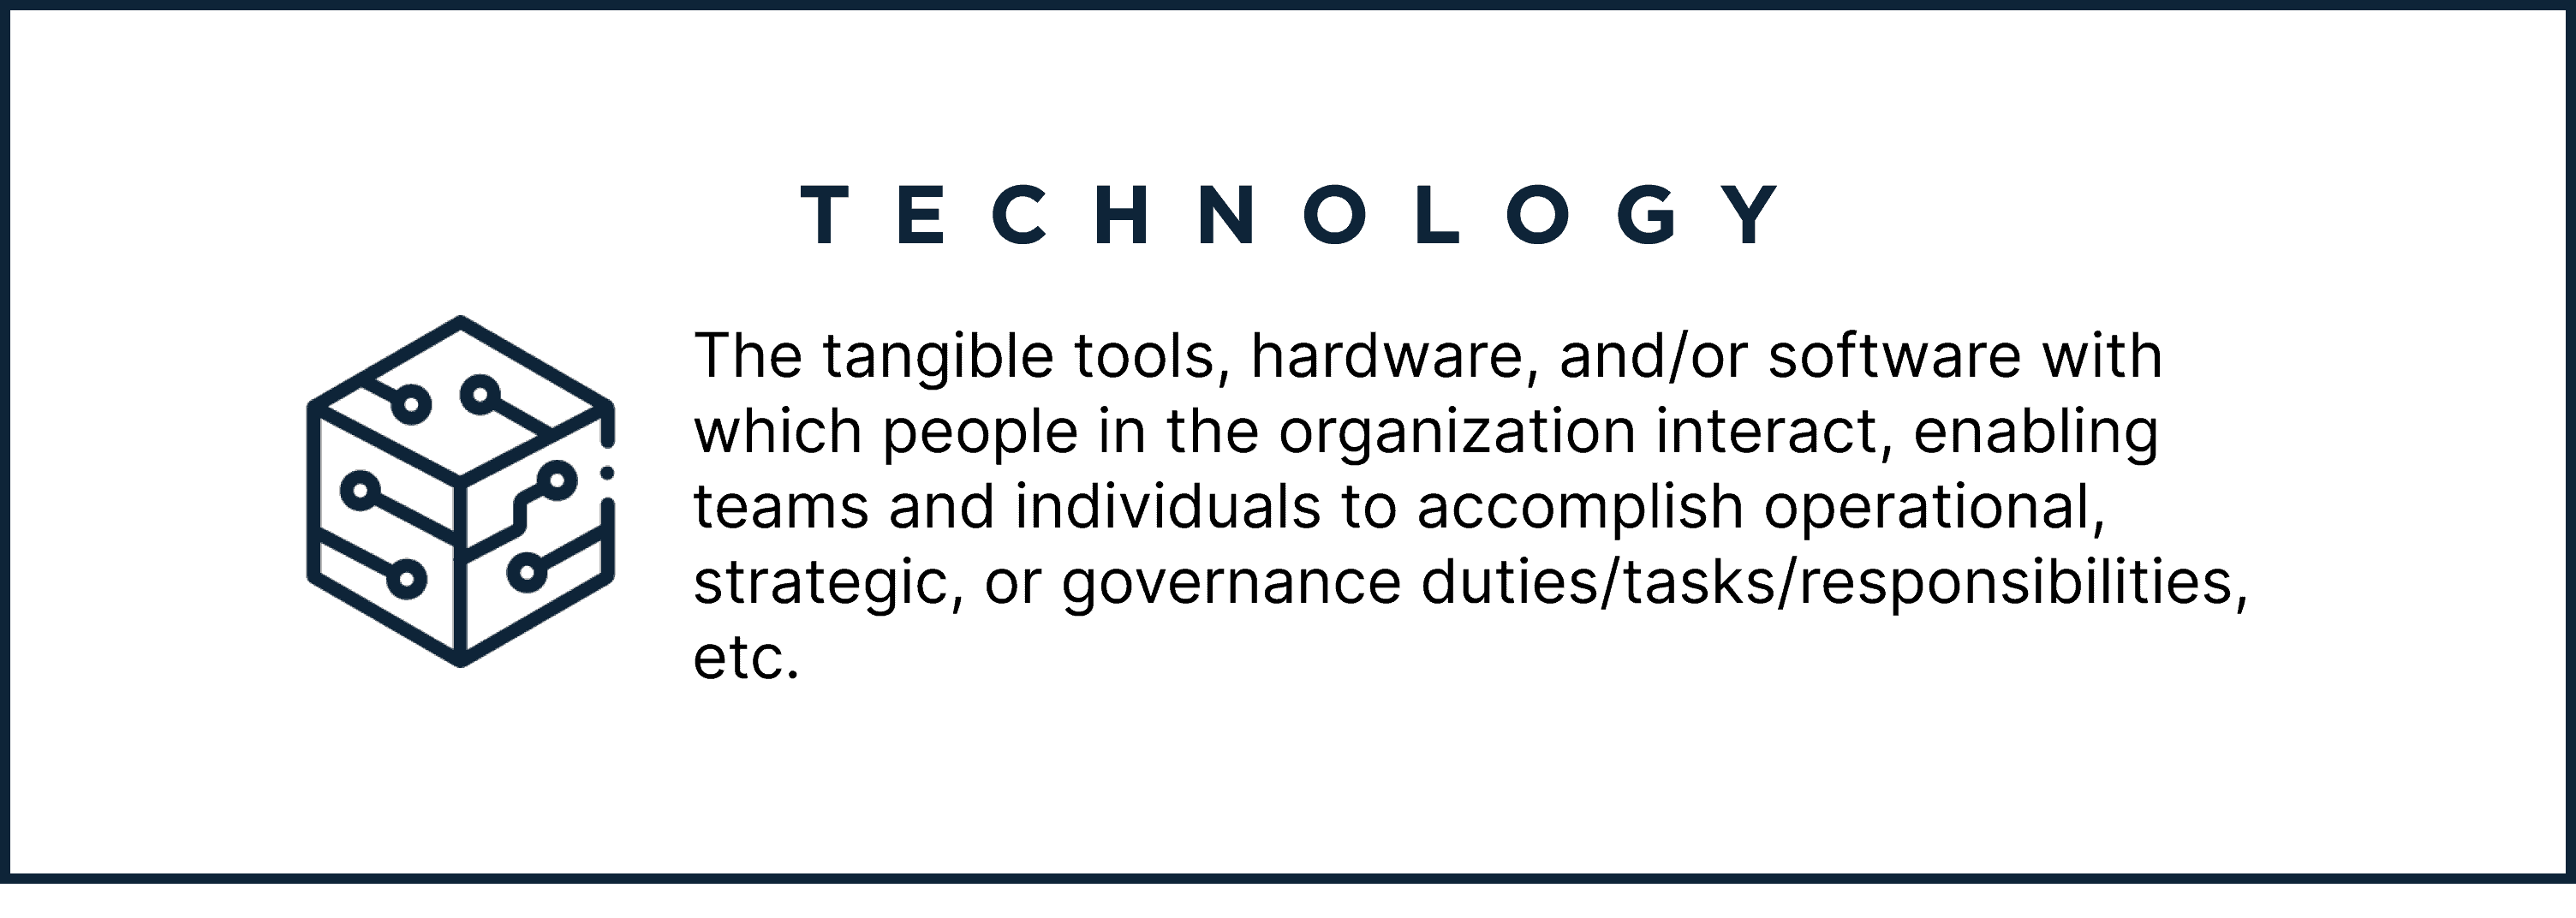 Technology11